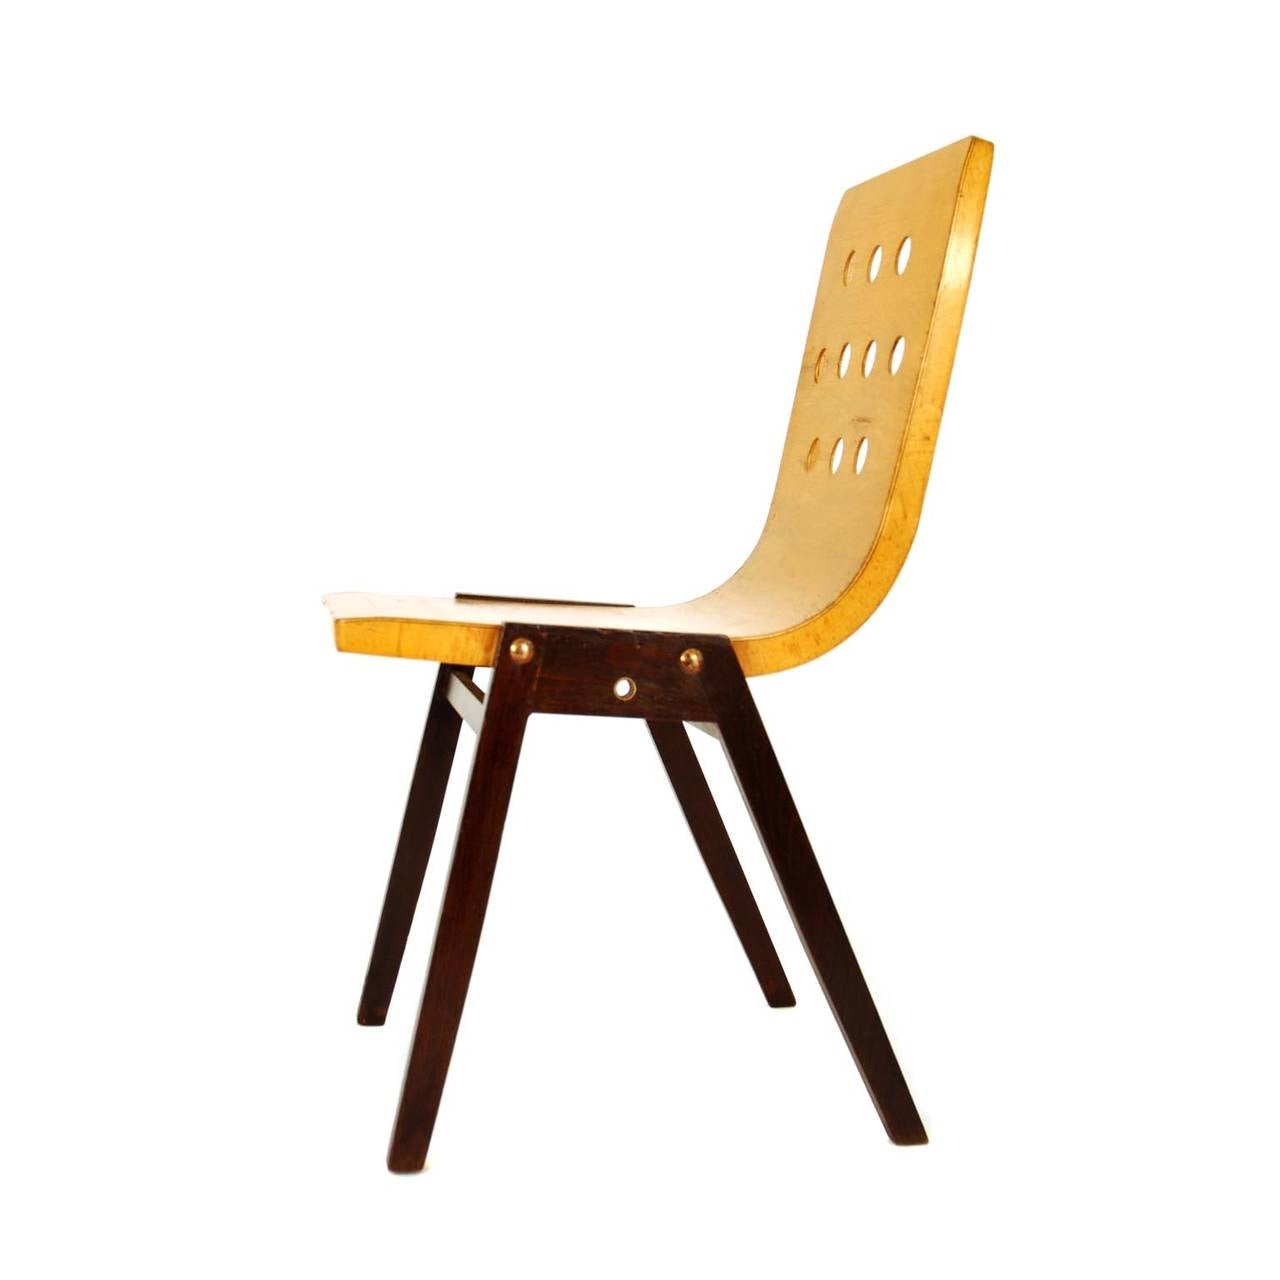 Mid-Century Modern Stacking Chairs by Roland Rainer, Austria, 1951